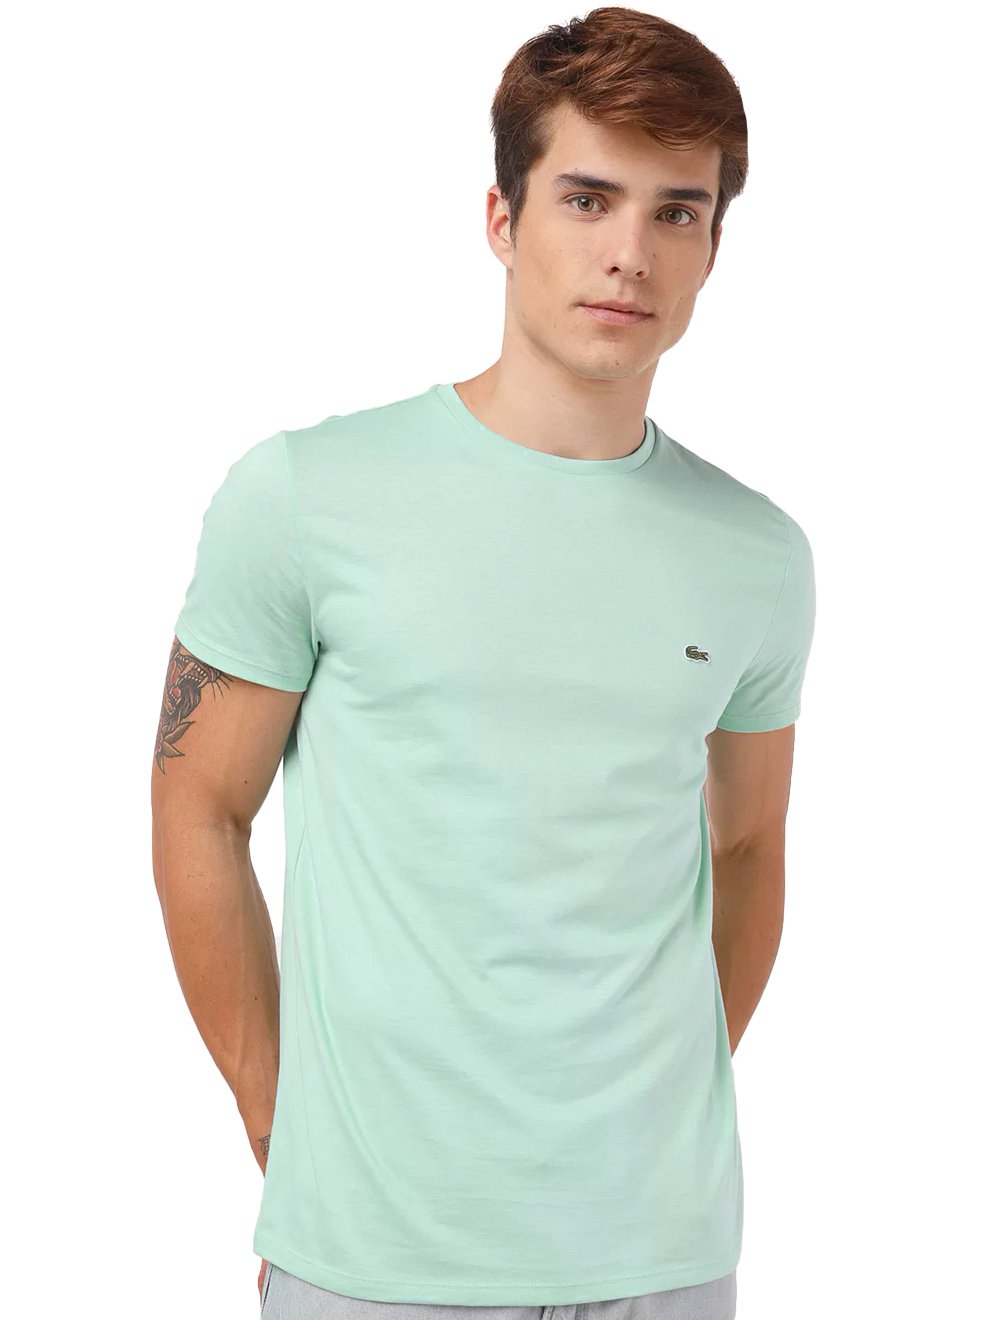 Camiseta Lacoste Masculina Jersey Pima Cotton Verde Menta